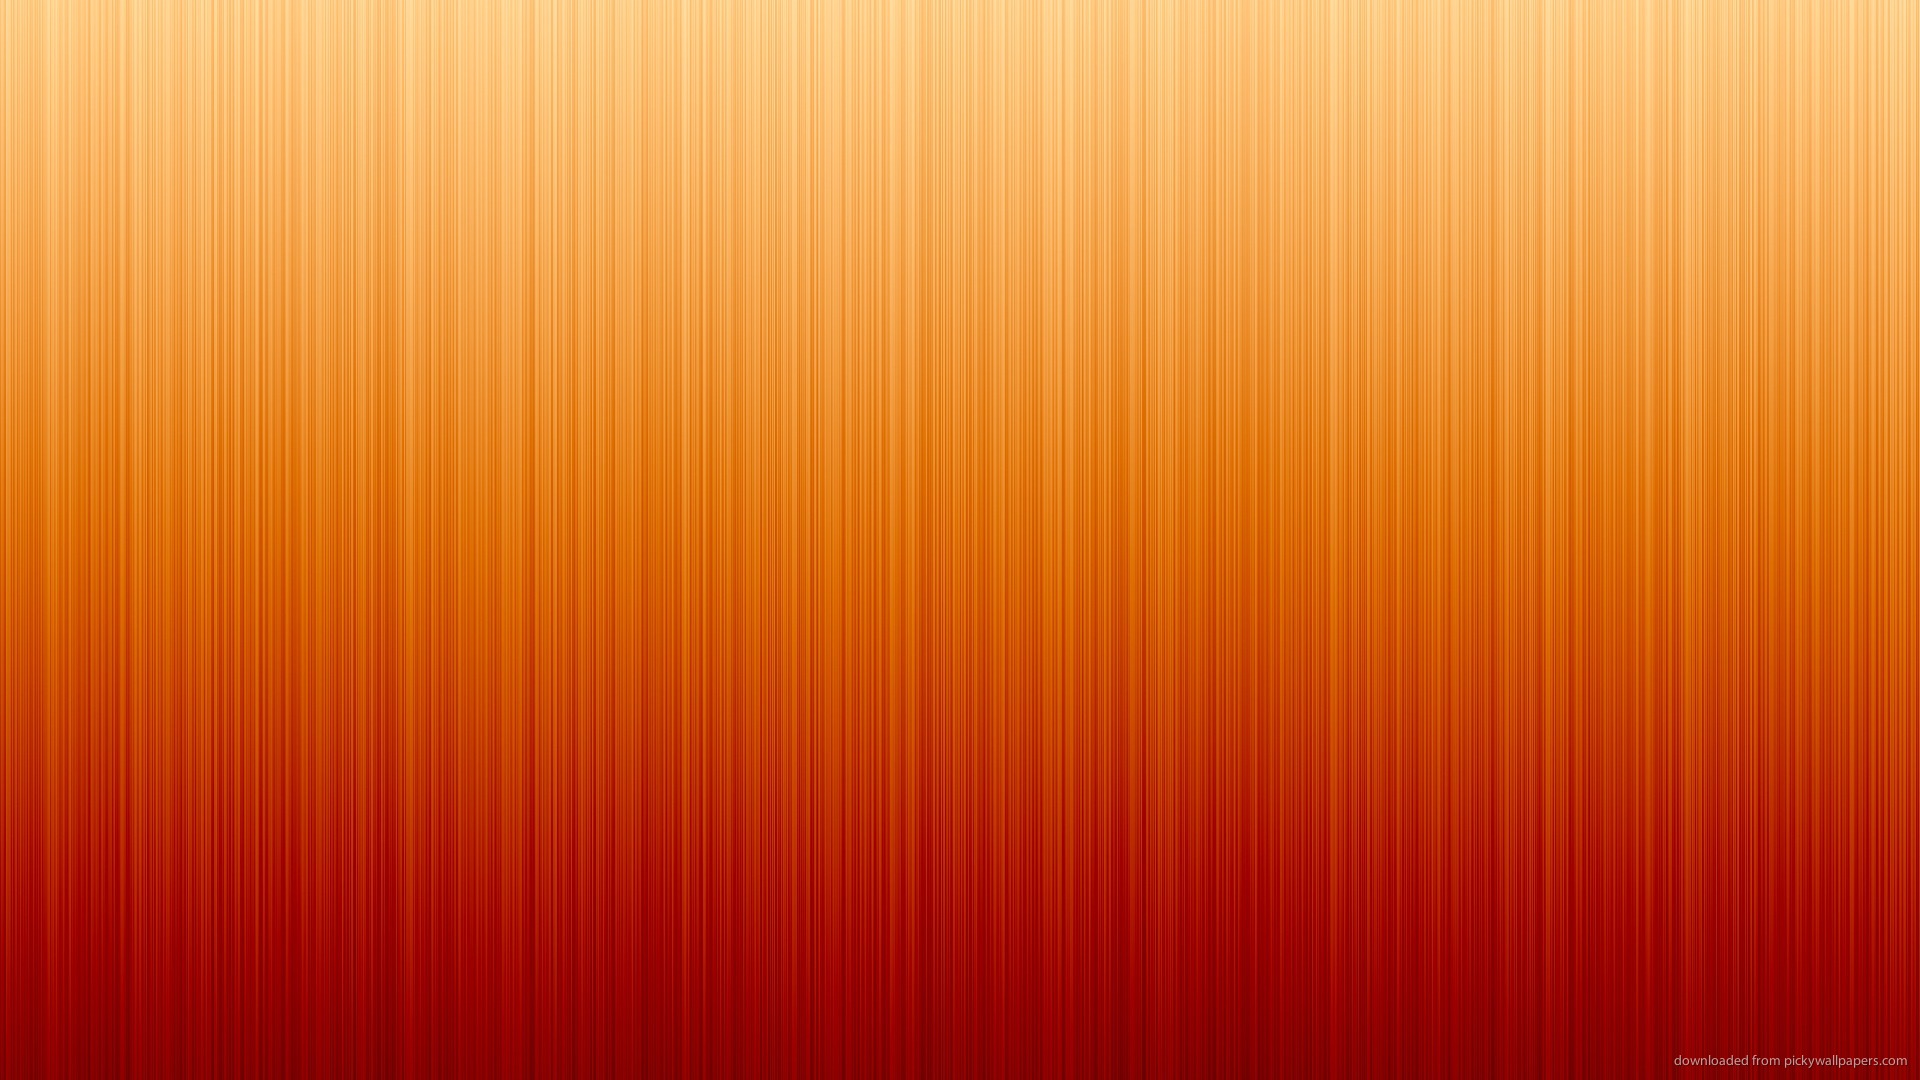 Brightwallpaper
bright Wallpaper - Orange Wallpaper Iphone - HD Wallpaper 